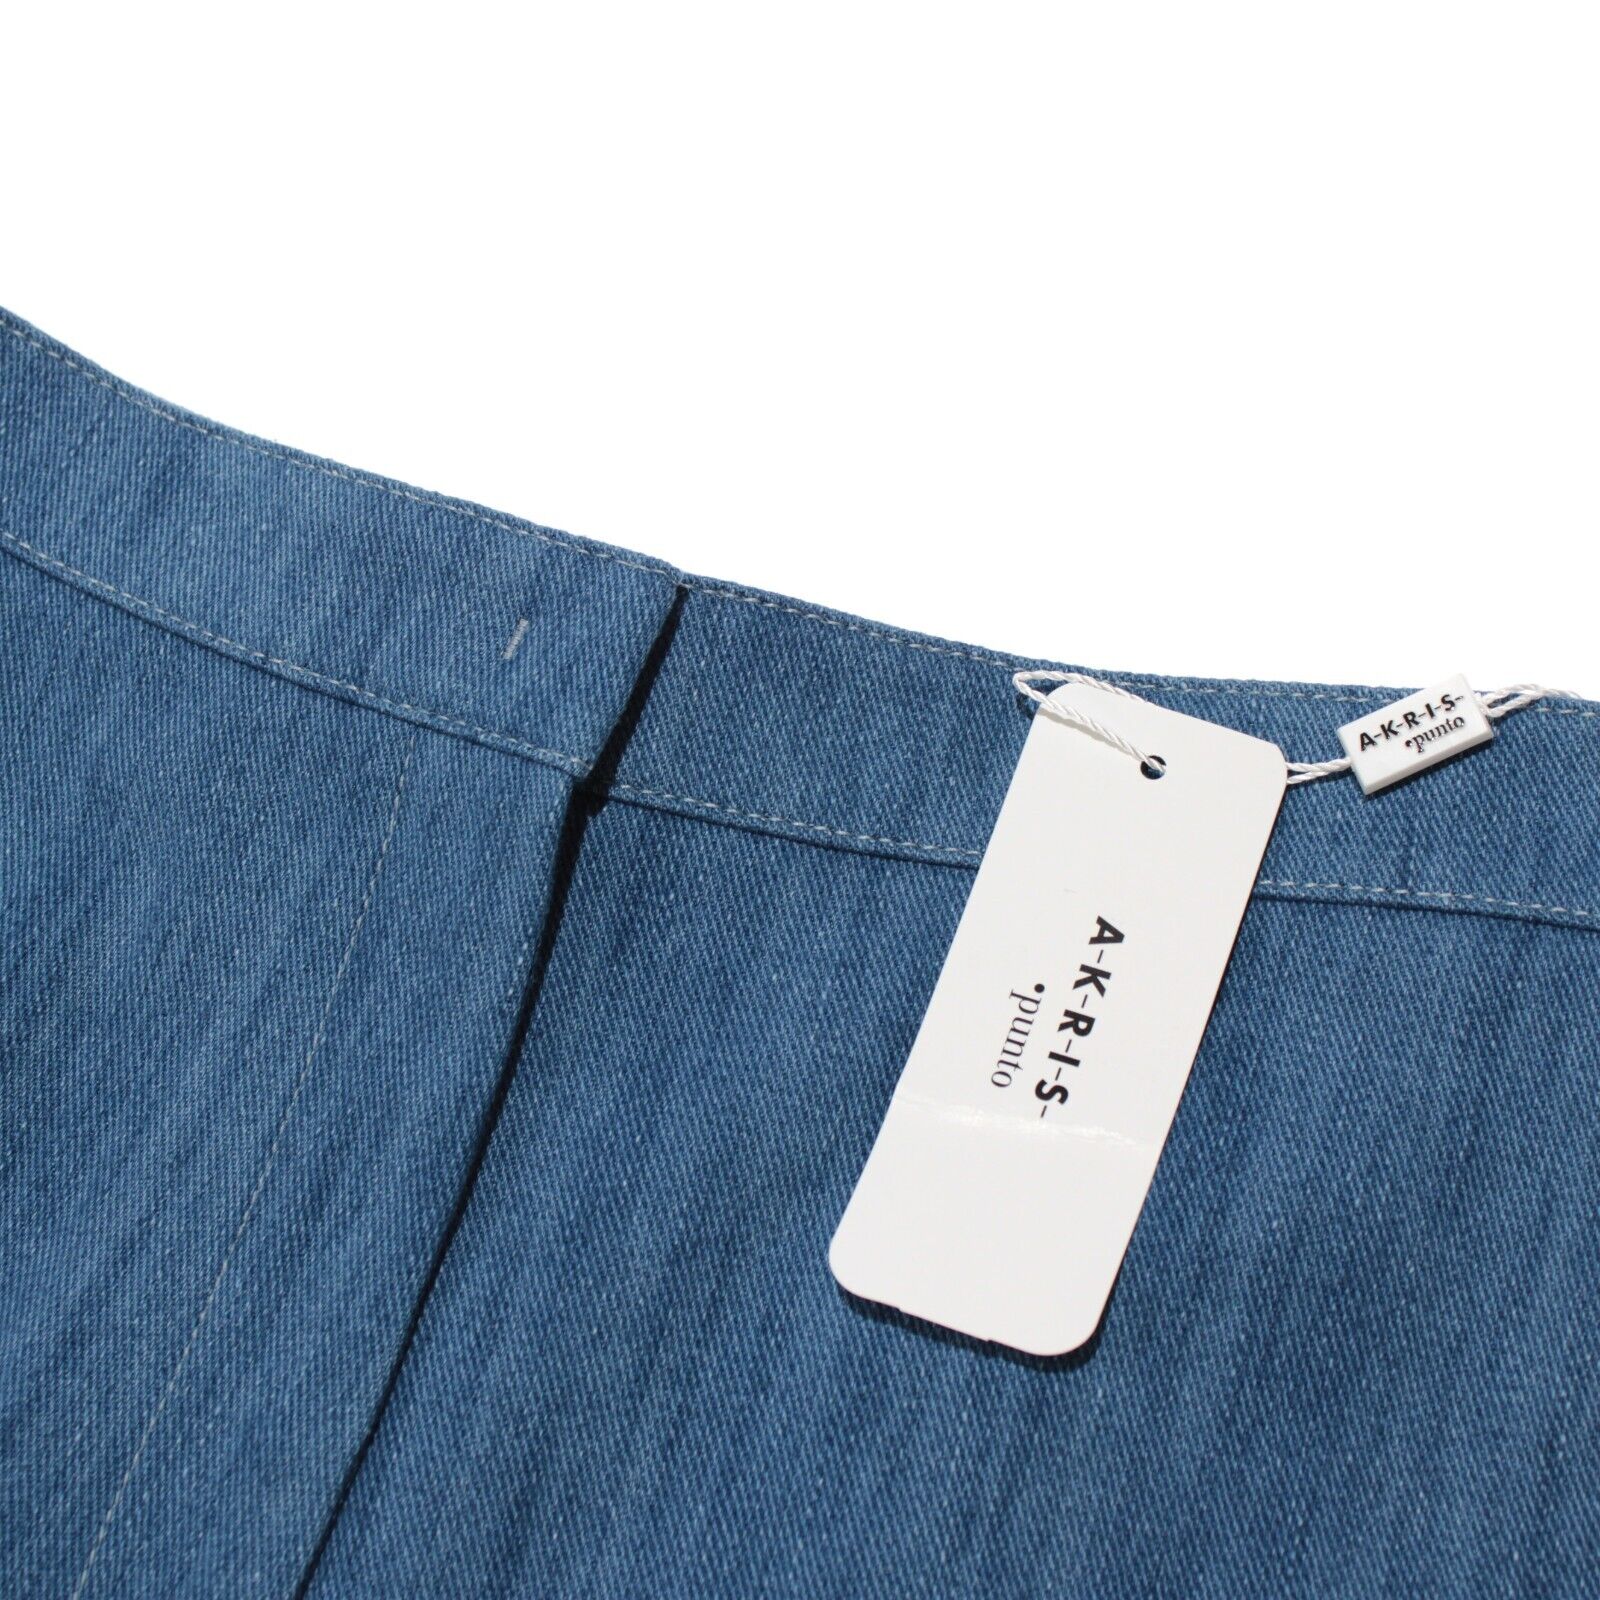 Akris Punto NWT Filia Denim Shorts Size 8 in Medium Blue Cotton Blend